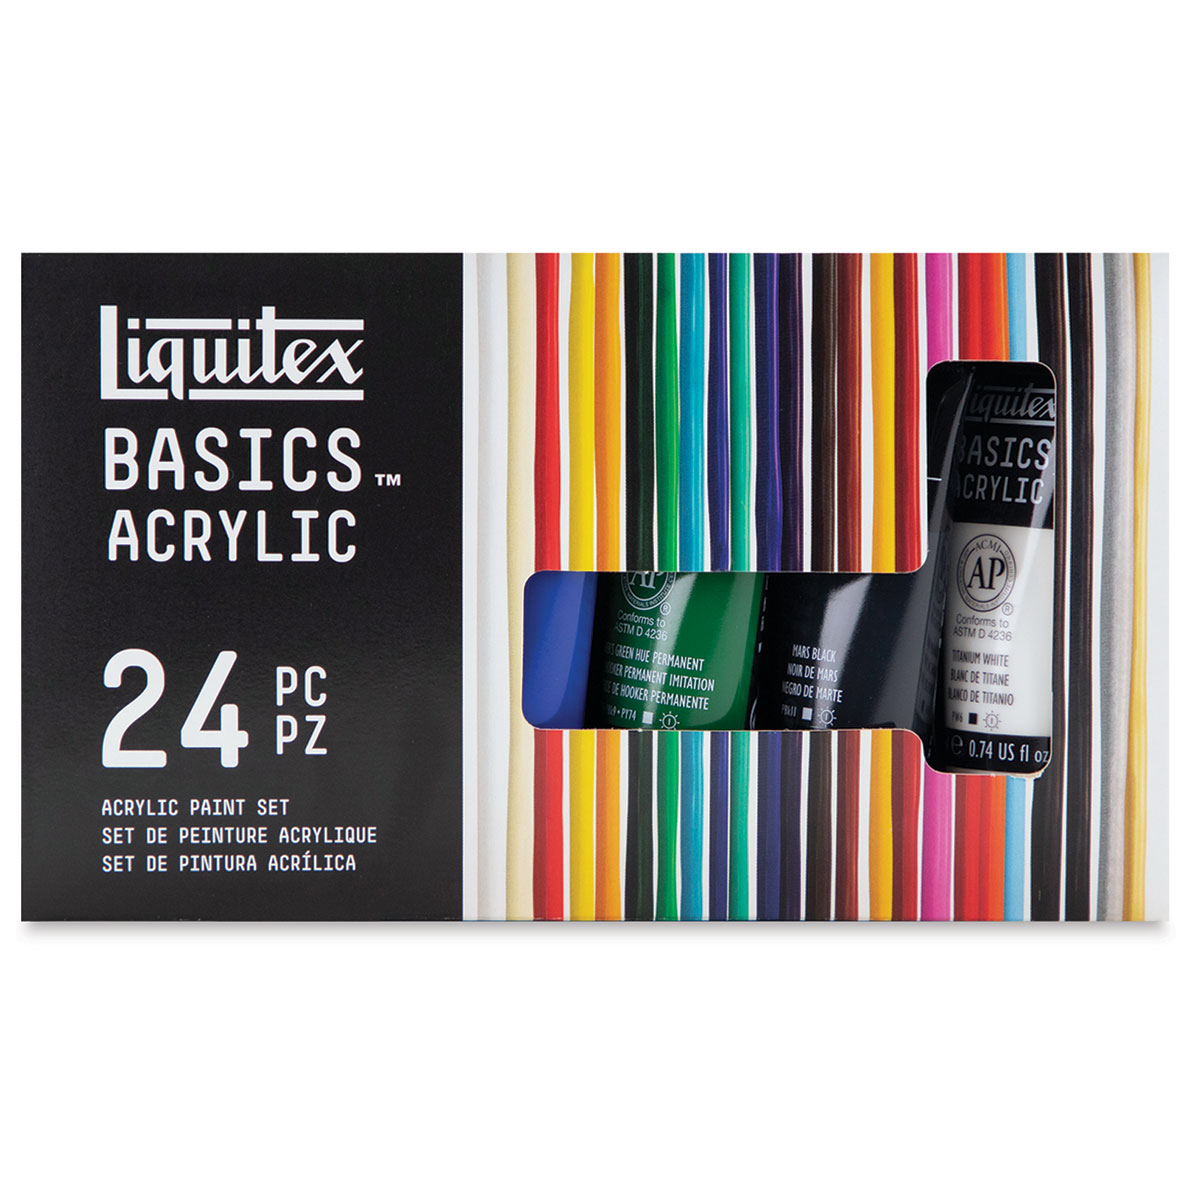 Liquitex Basics Acrylic Paint Gold 4 oz